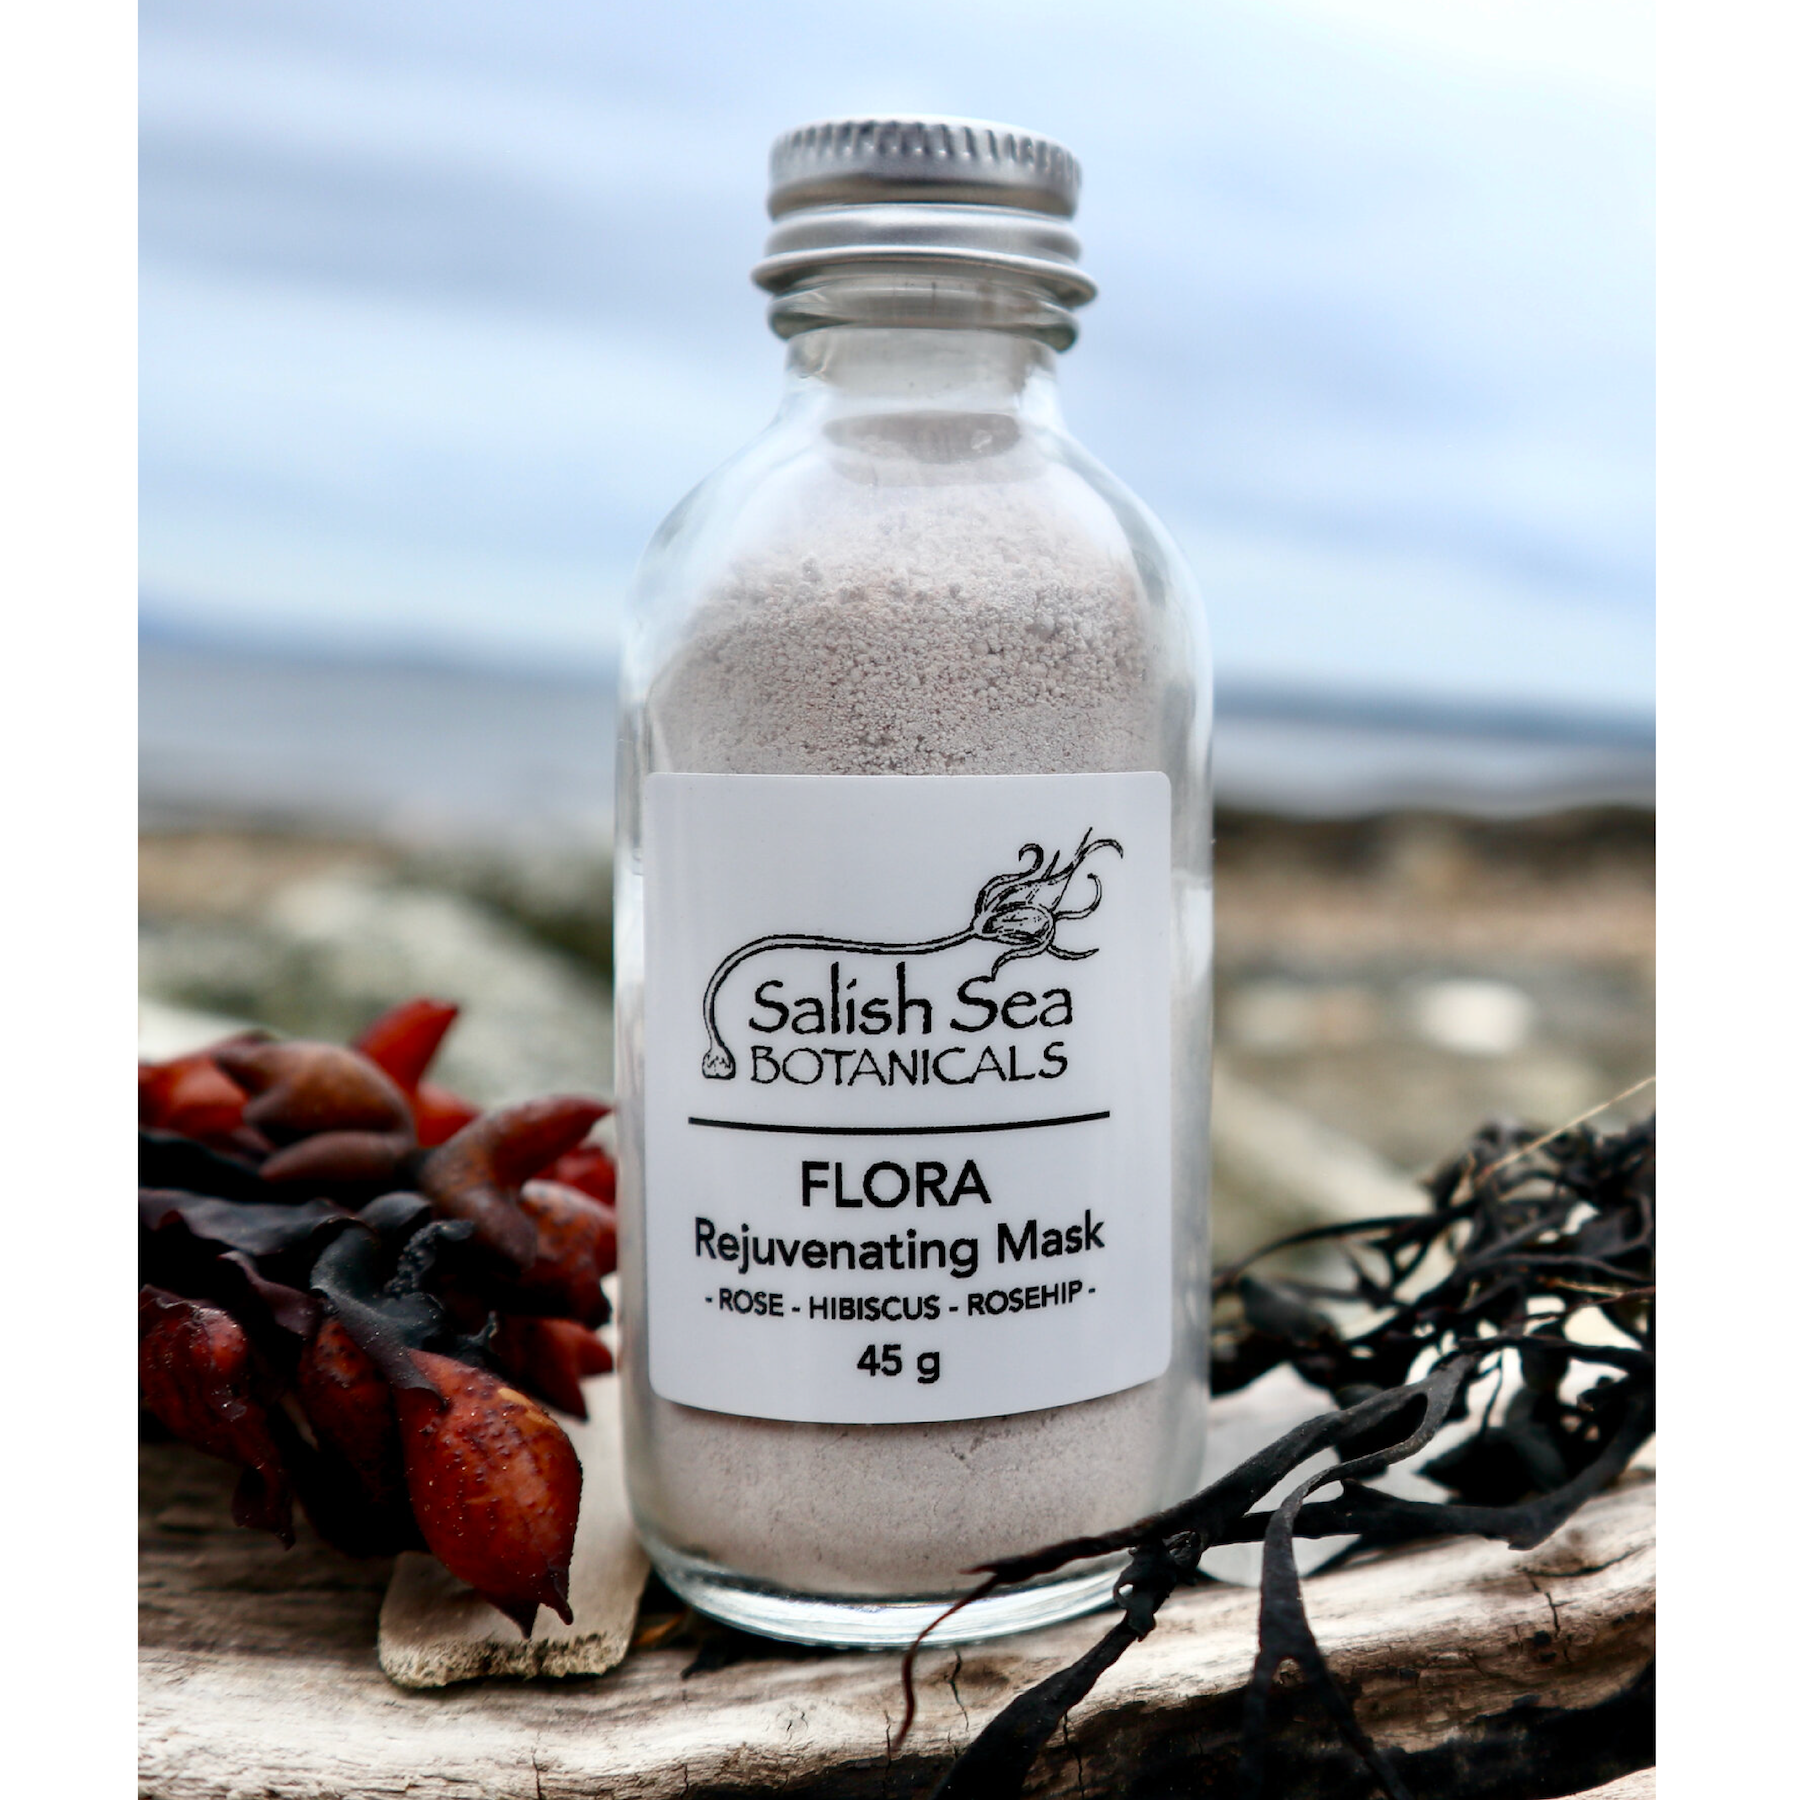 FLORA | Rejuvenation Mask by Salish Sea Botanicals